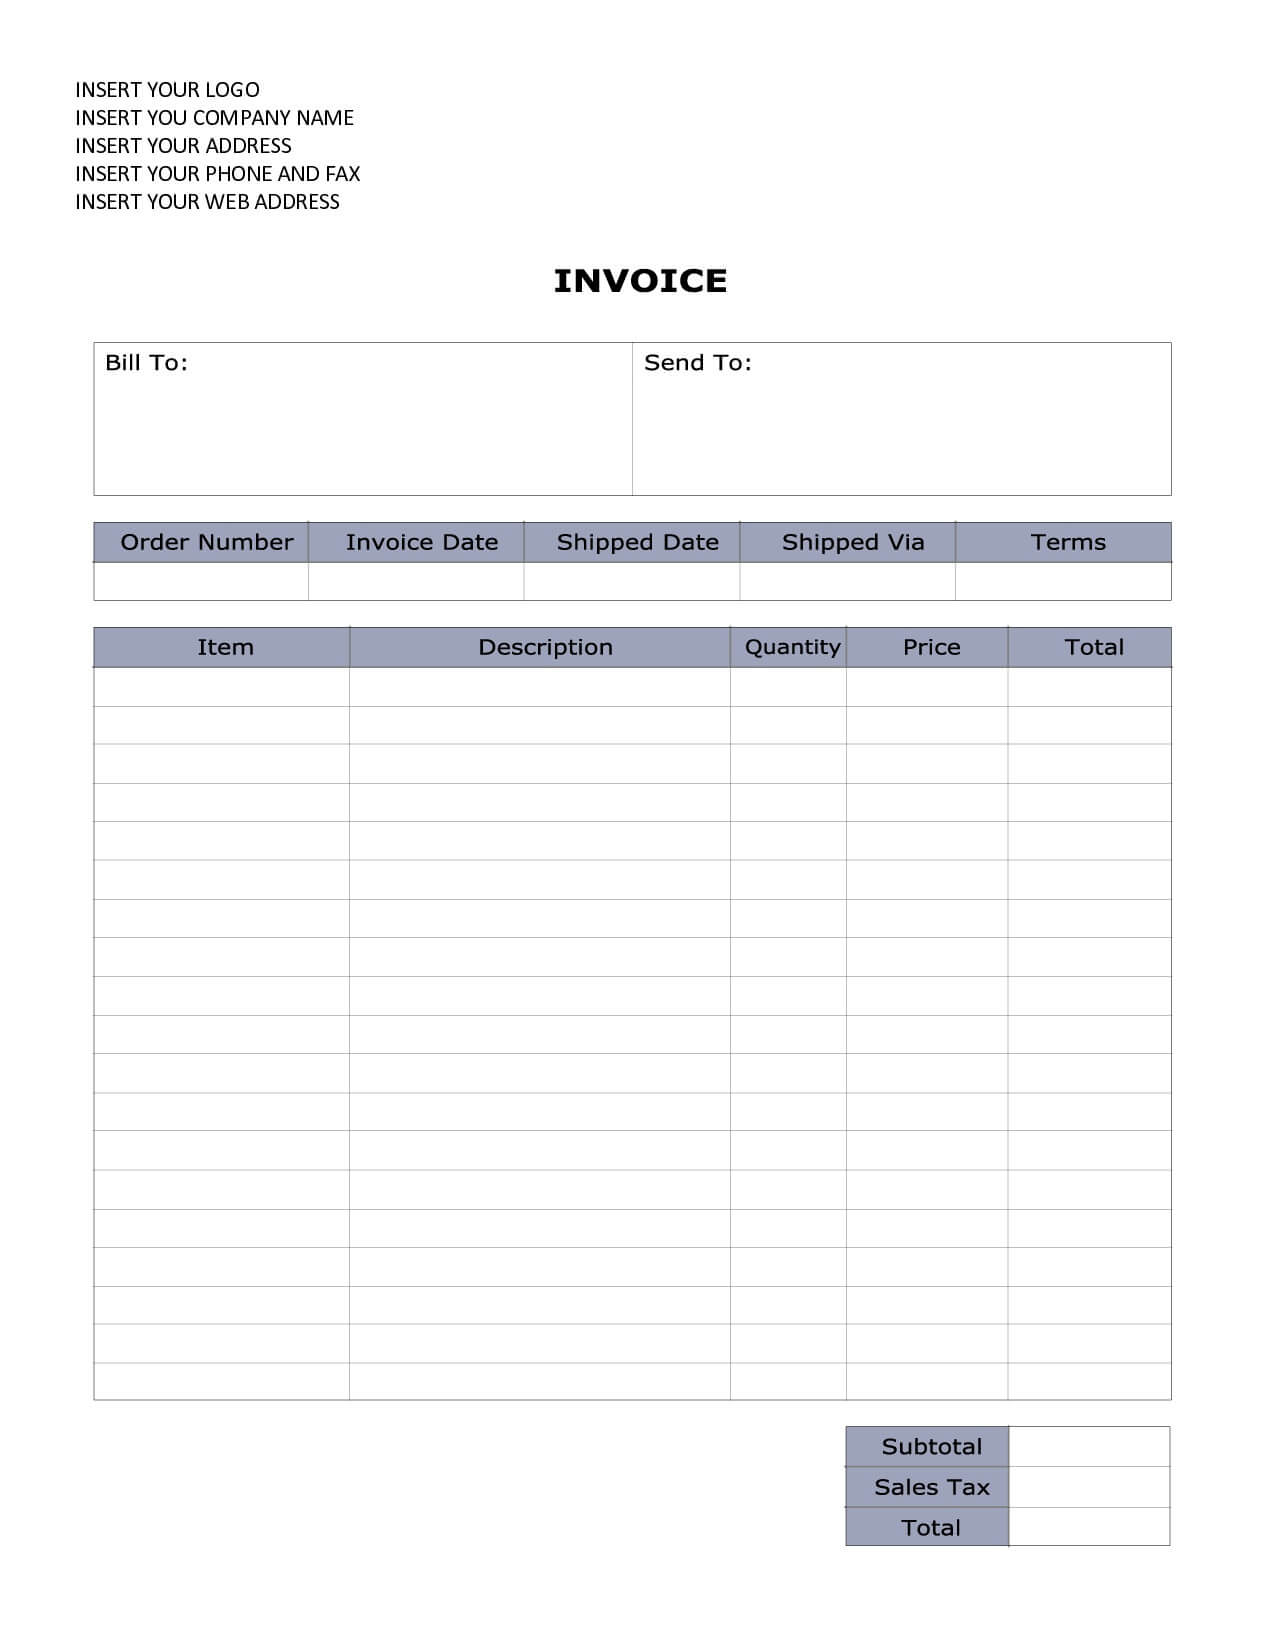 Generic Invoice Template Word Best Of 5 Generic Invoice Regarding Invoice Template Word 2010